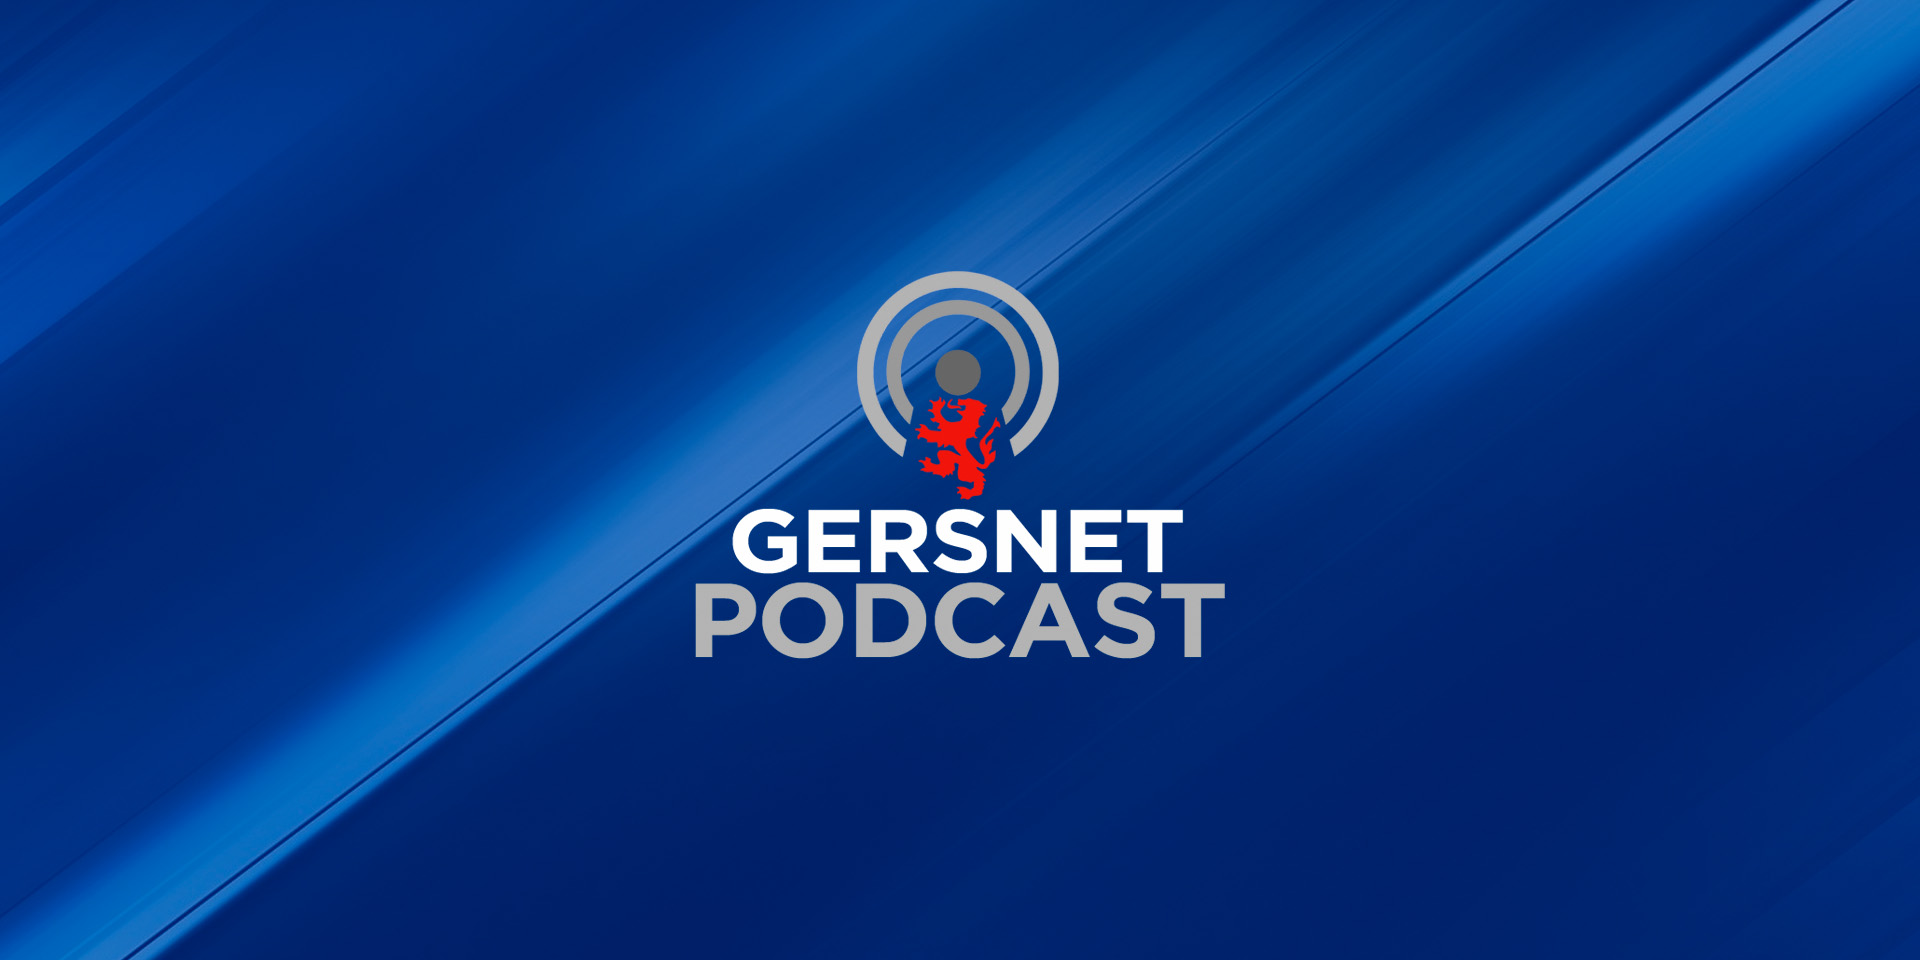 Gersnet Podcast 233 - League Cup Semi-Final Preview